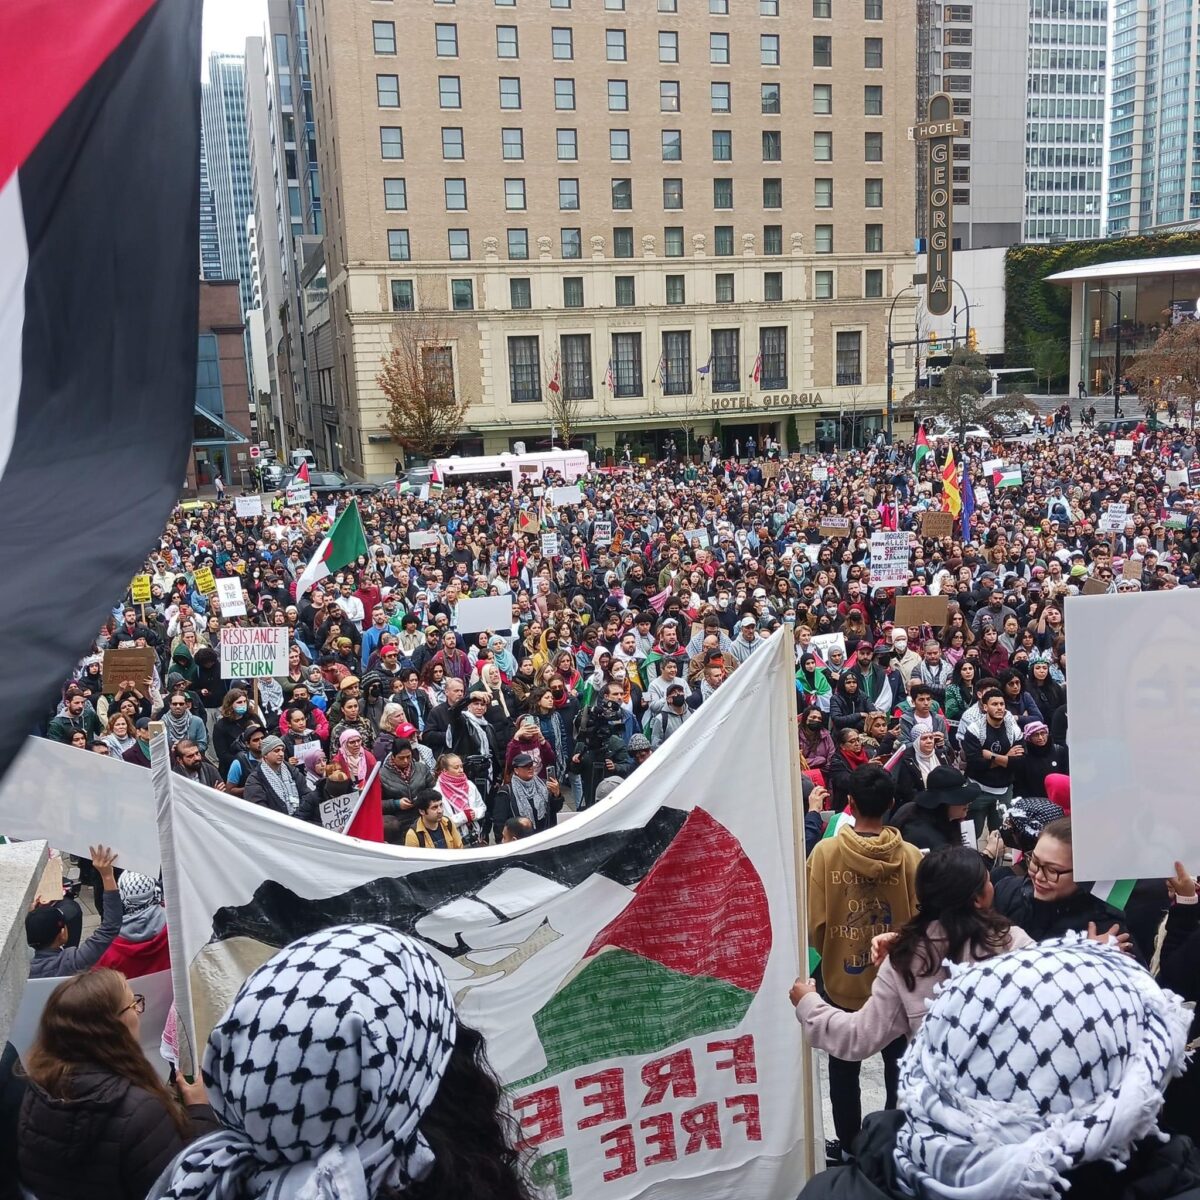 Vancouver Events 4 Palestine, Defense Fund